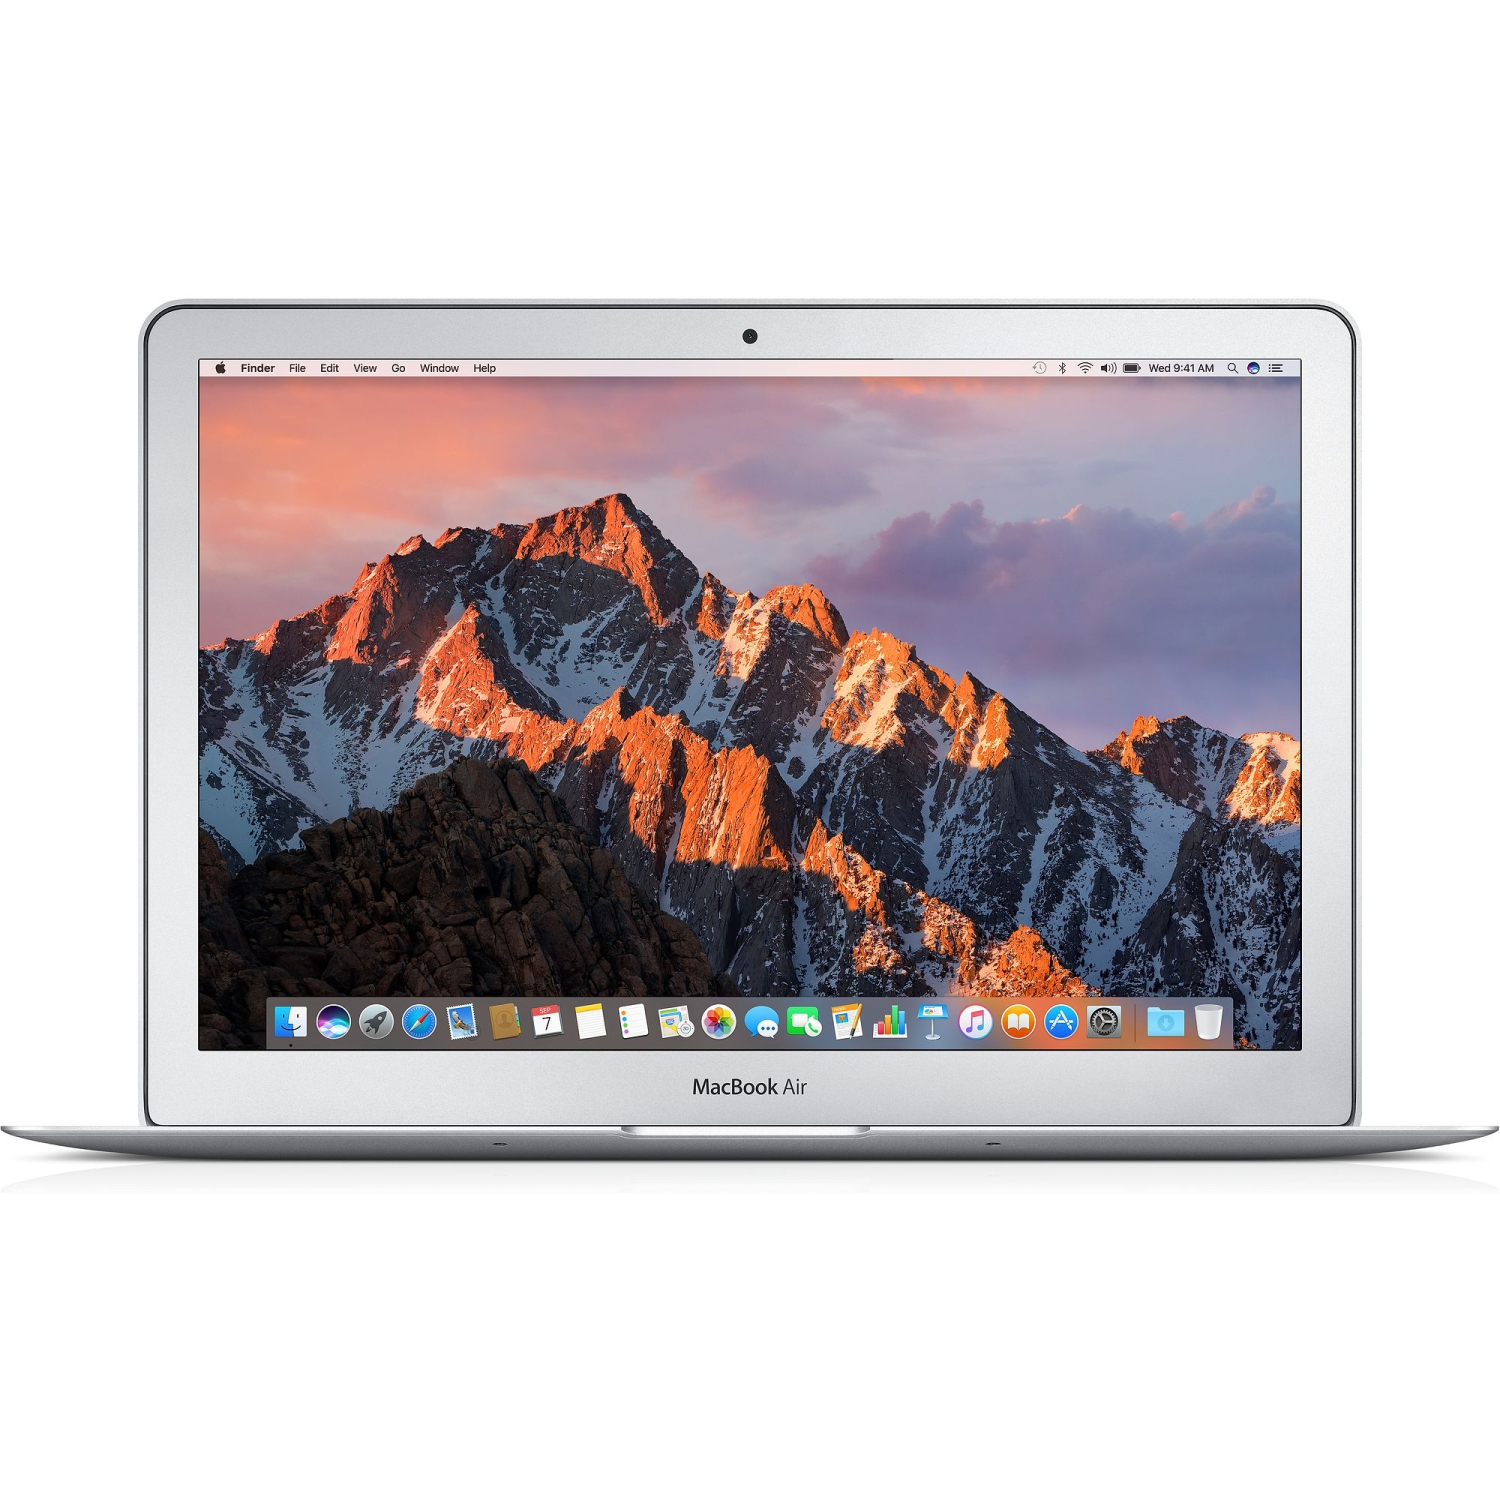 Refurbished (Good) - Apple Macbook Air 13" (A1466), Intel Core i7 @ 2.2GHz, 8GB RAM, 256GB SSD - 2015